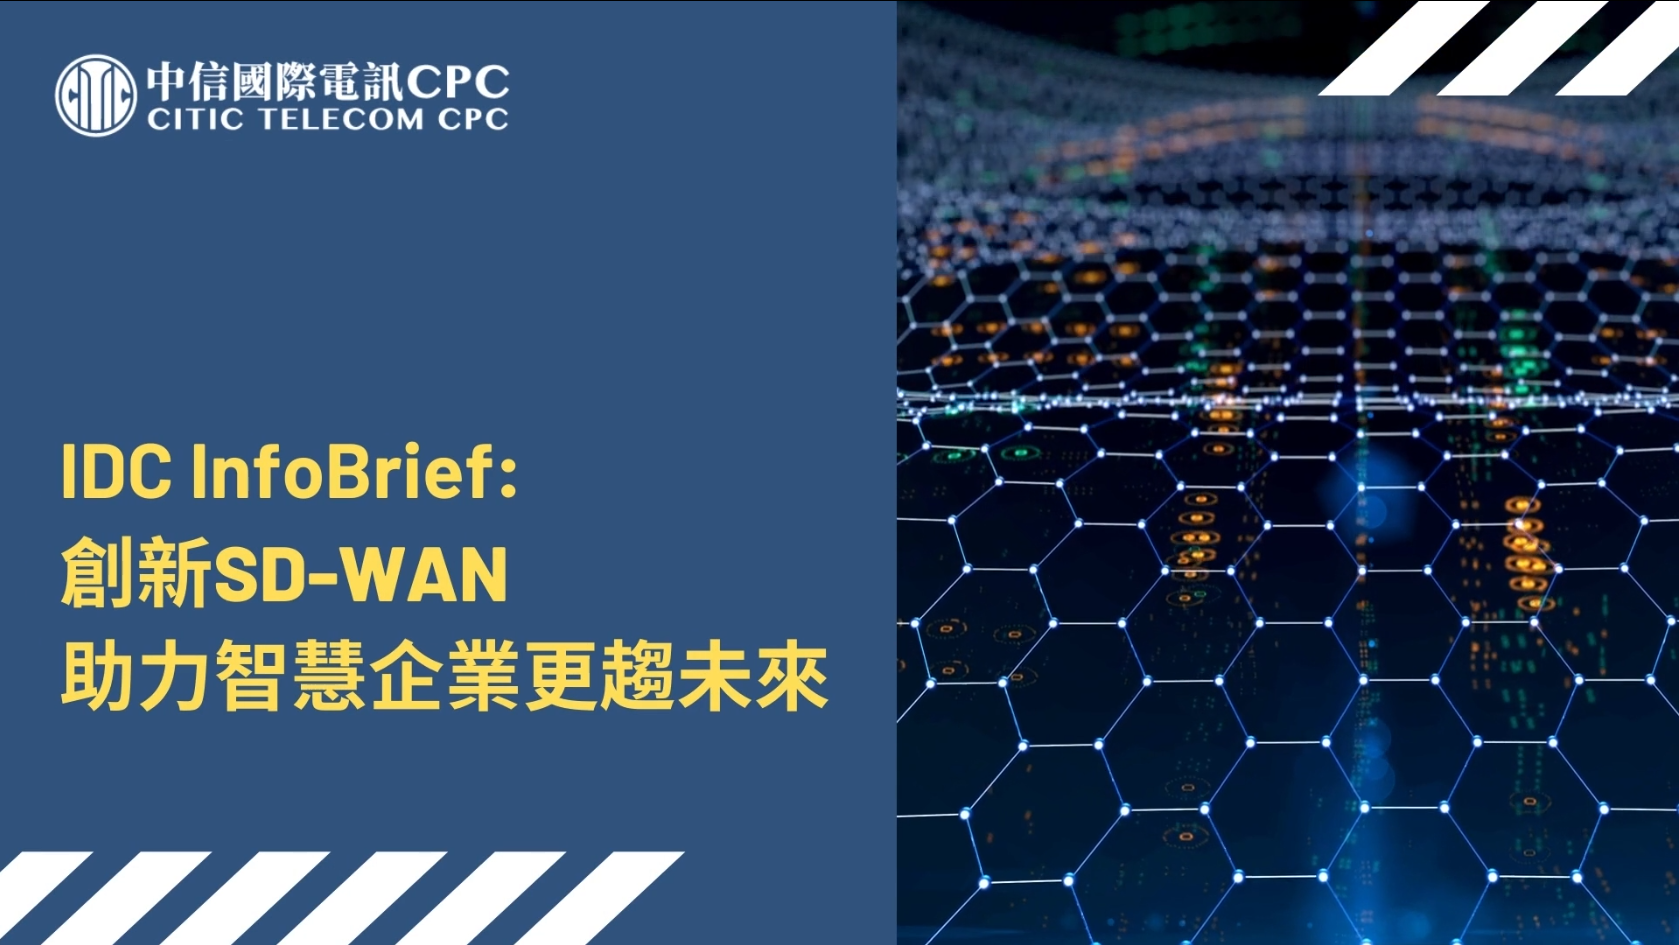 SD-WAN融合人工智能 激发潜在商业价值